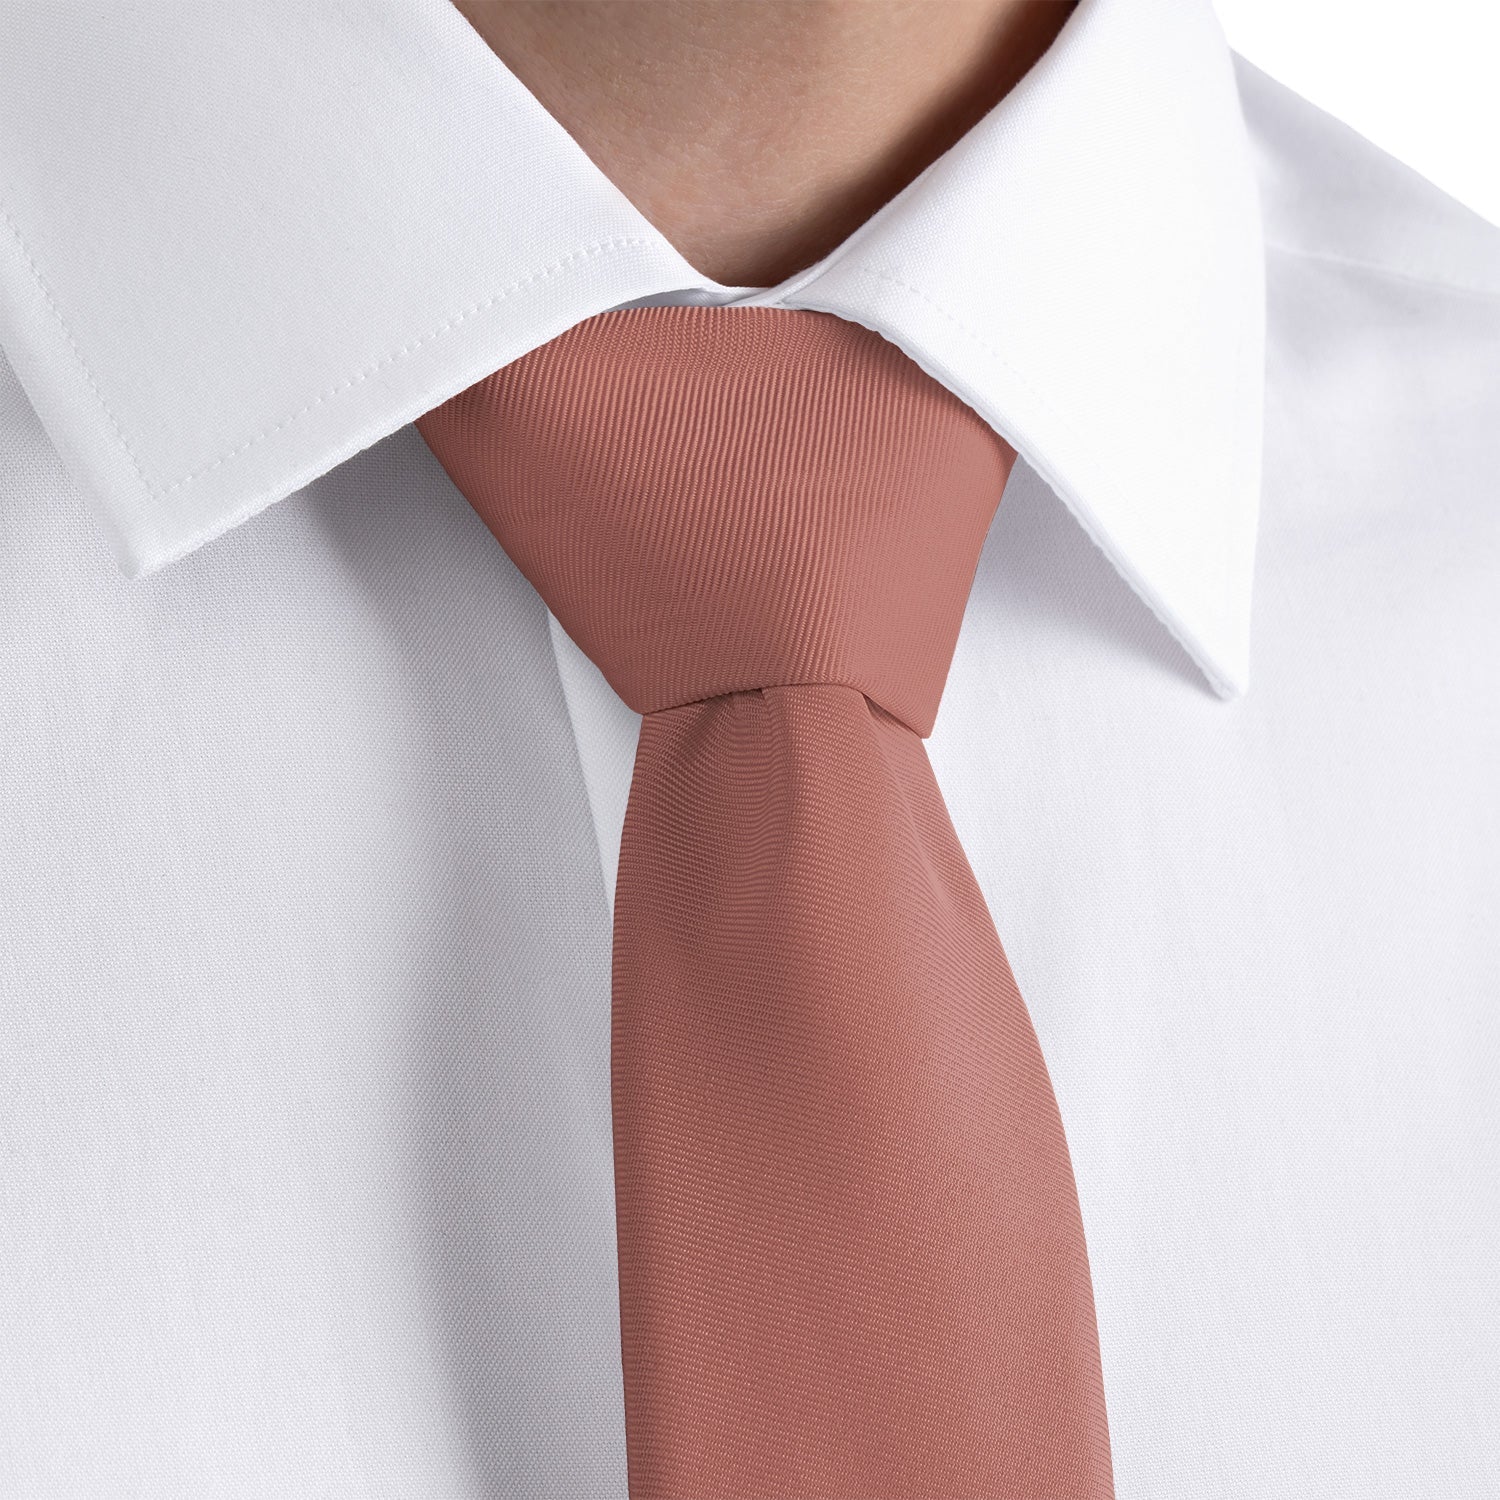 Azazie Cedar Rose Necktie - Rolled - Knotty Tie Co.